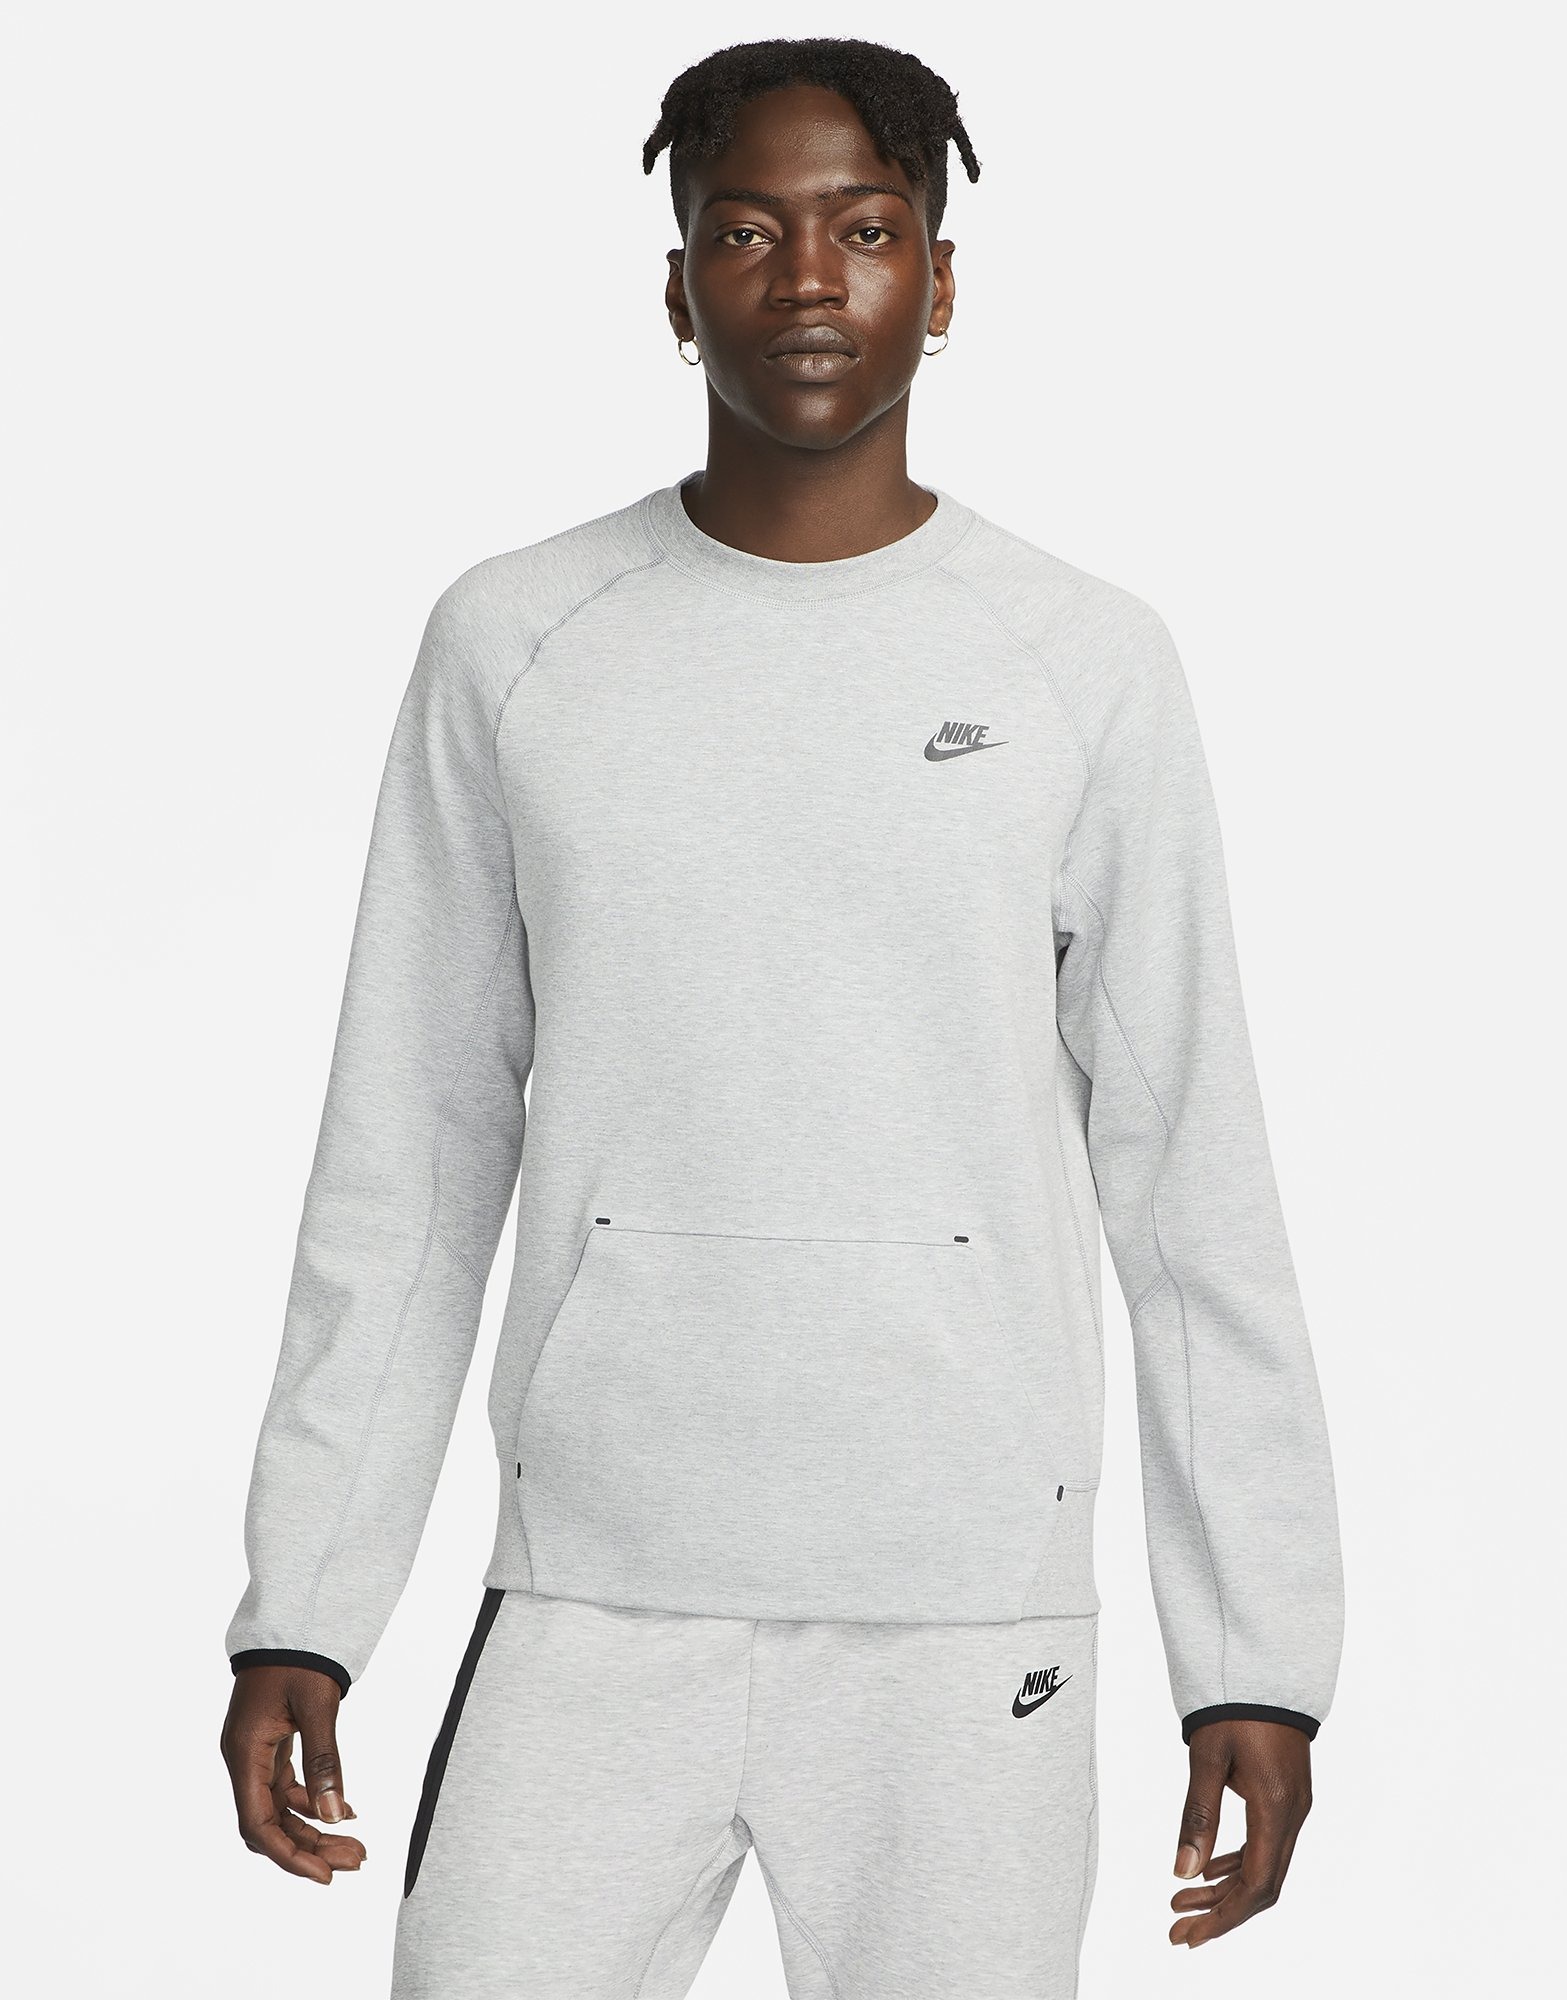 Grey Nike Tech Fleece Sweatshirt | JD Sports UK